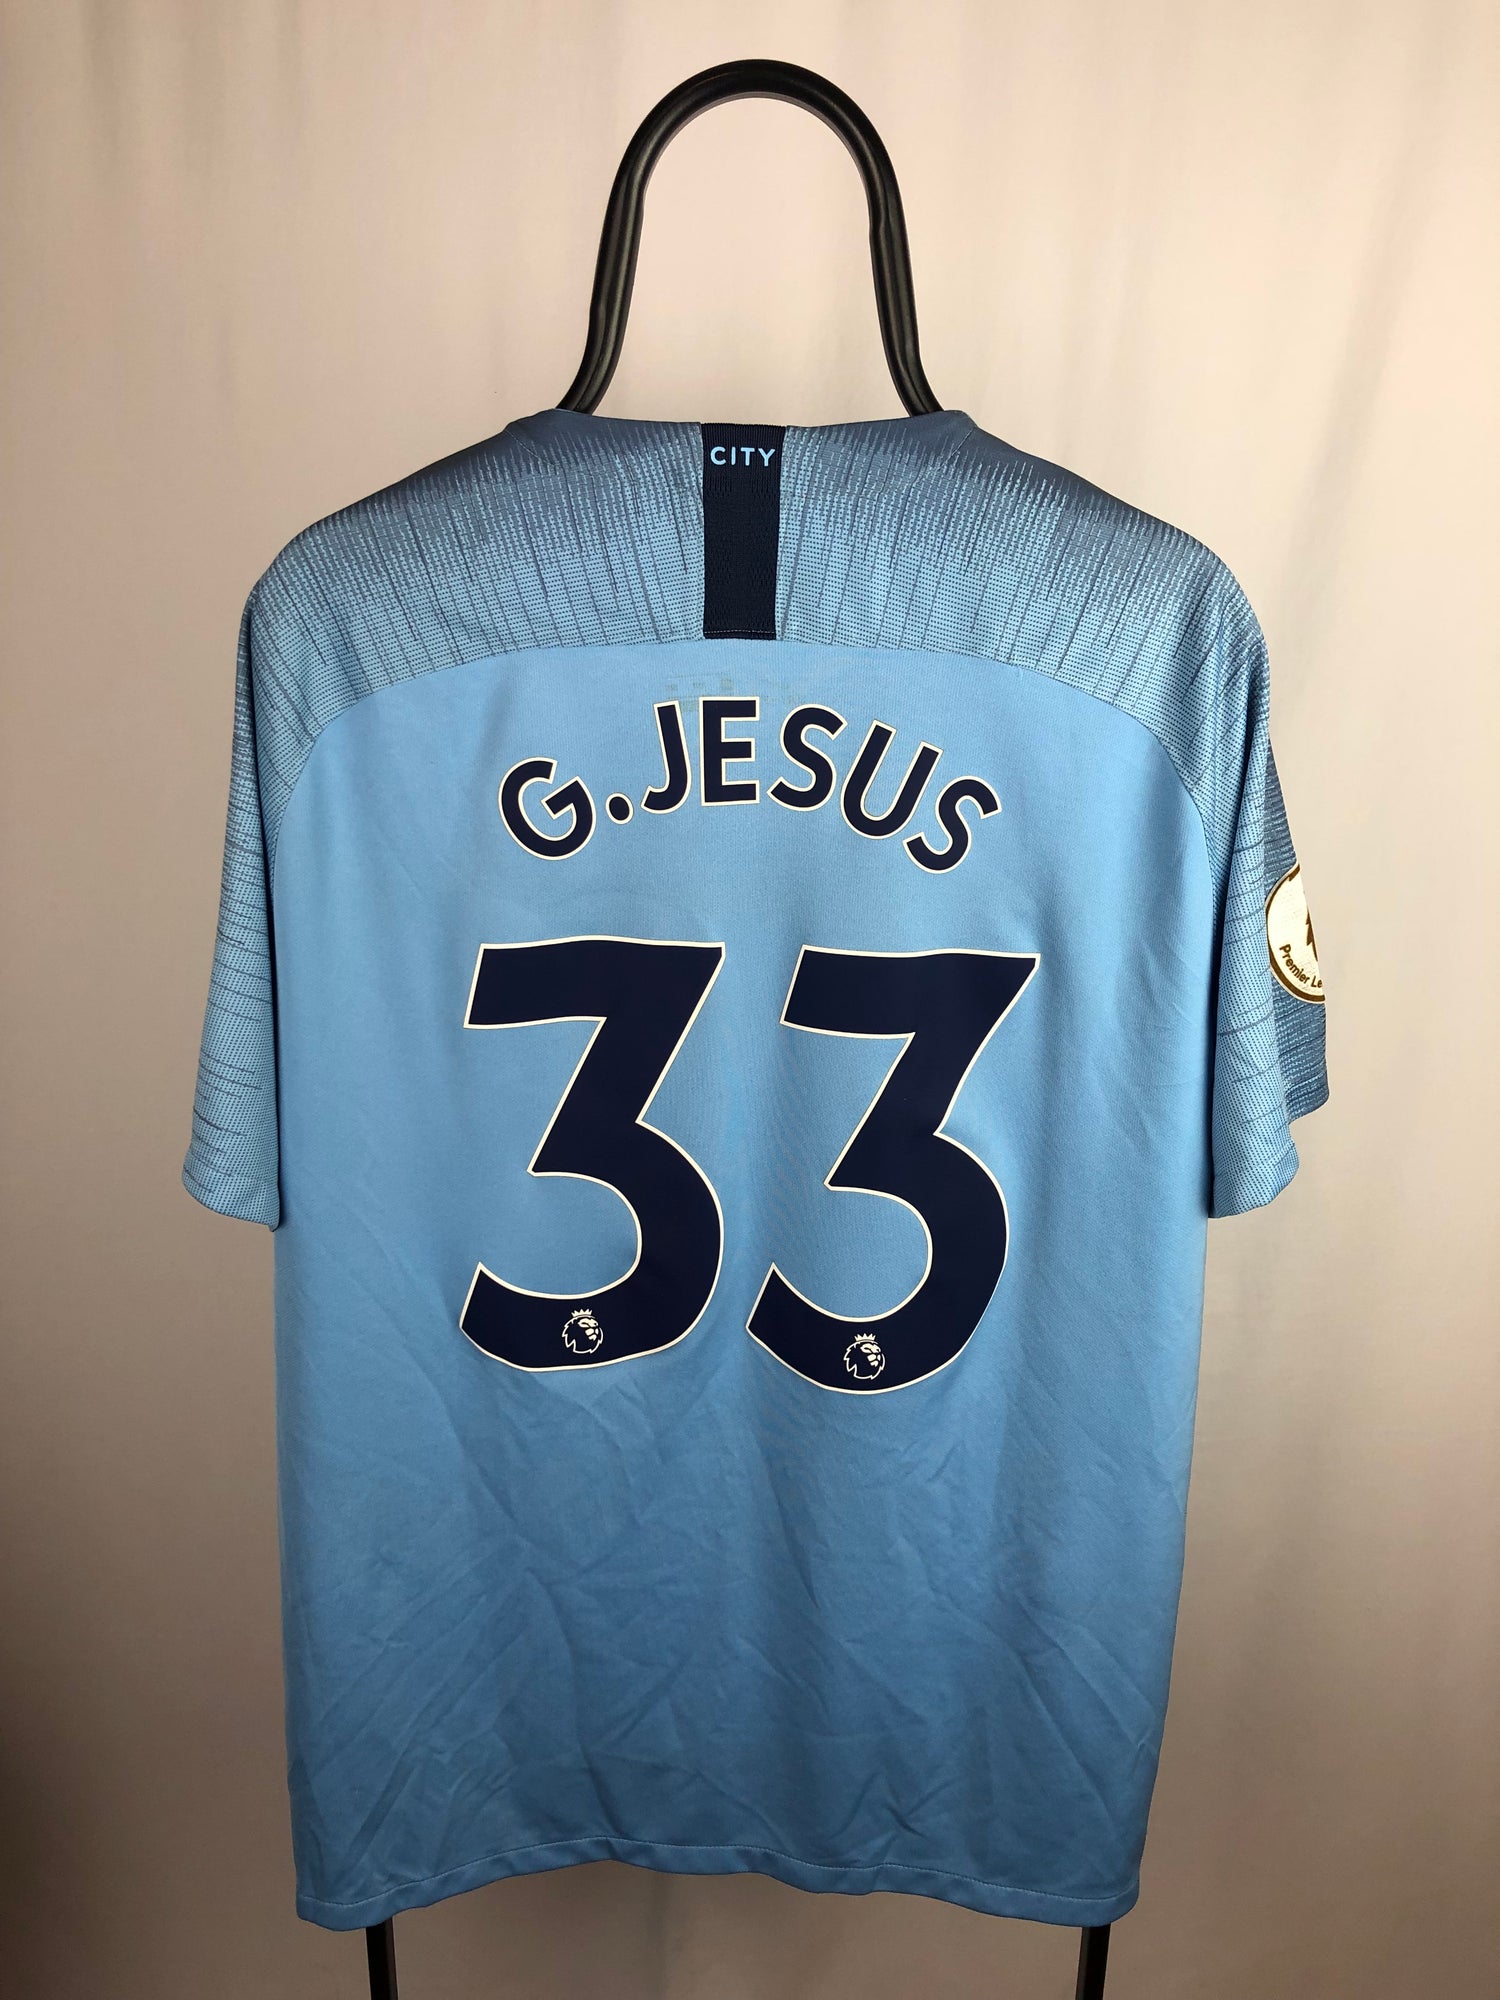 Gabriel Jesus Manchester City 18/19 hjemmebanetrøje - XXL